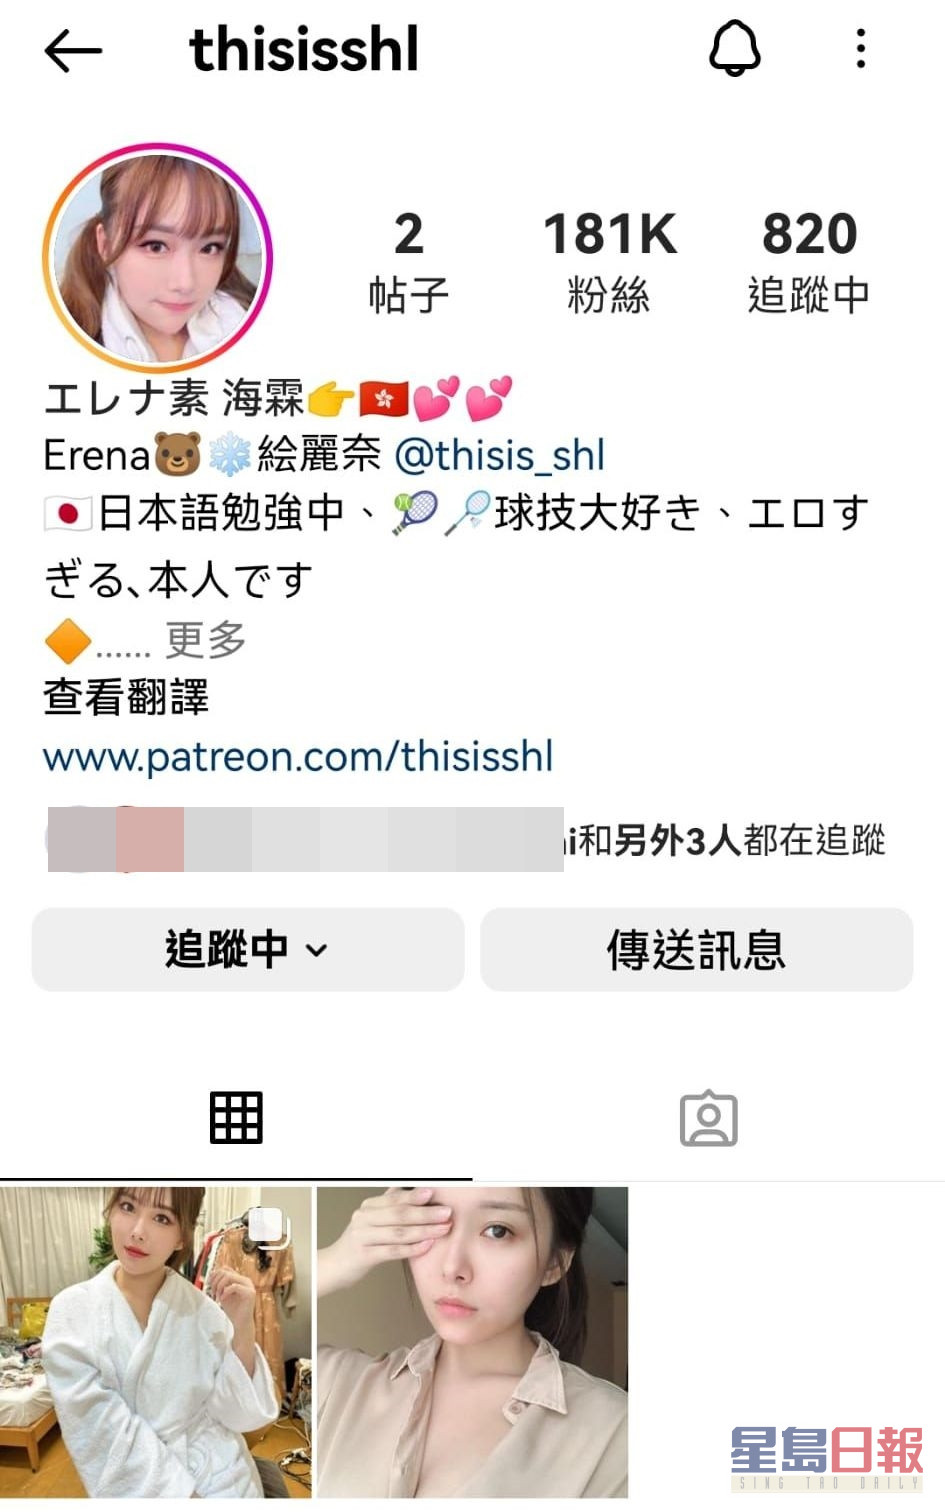 Erena的IG Follower由8萬7千勁升到18萬3，反應比預期中好。